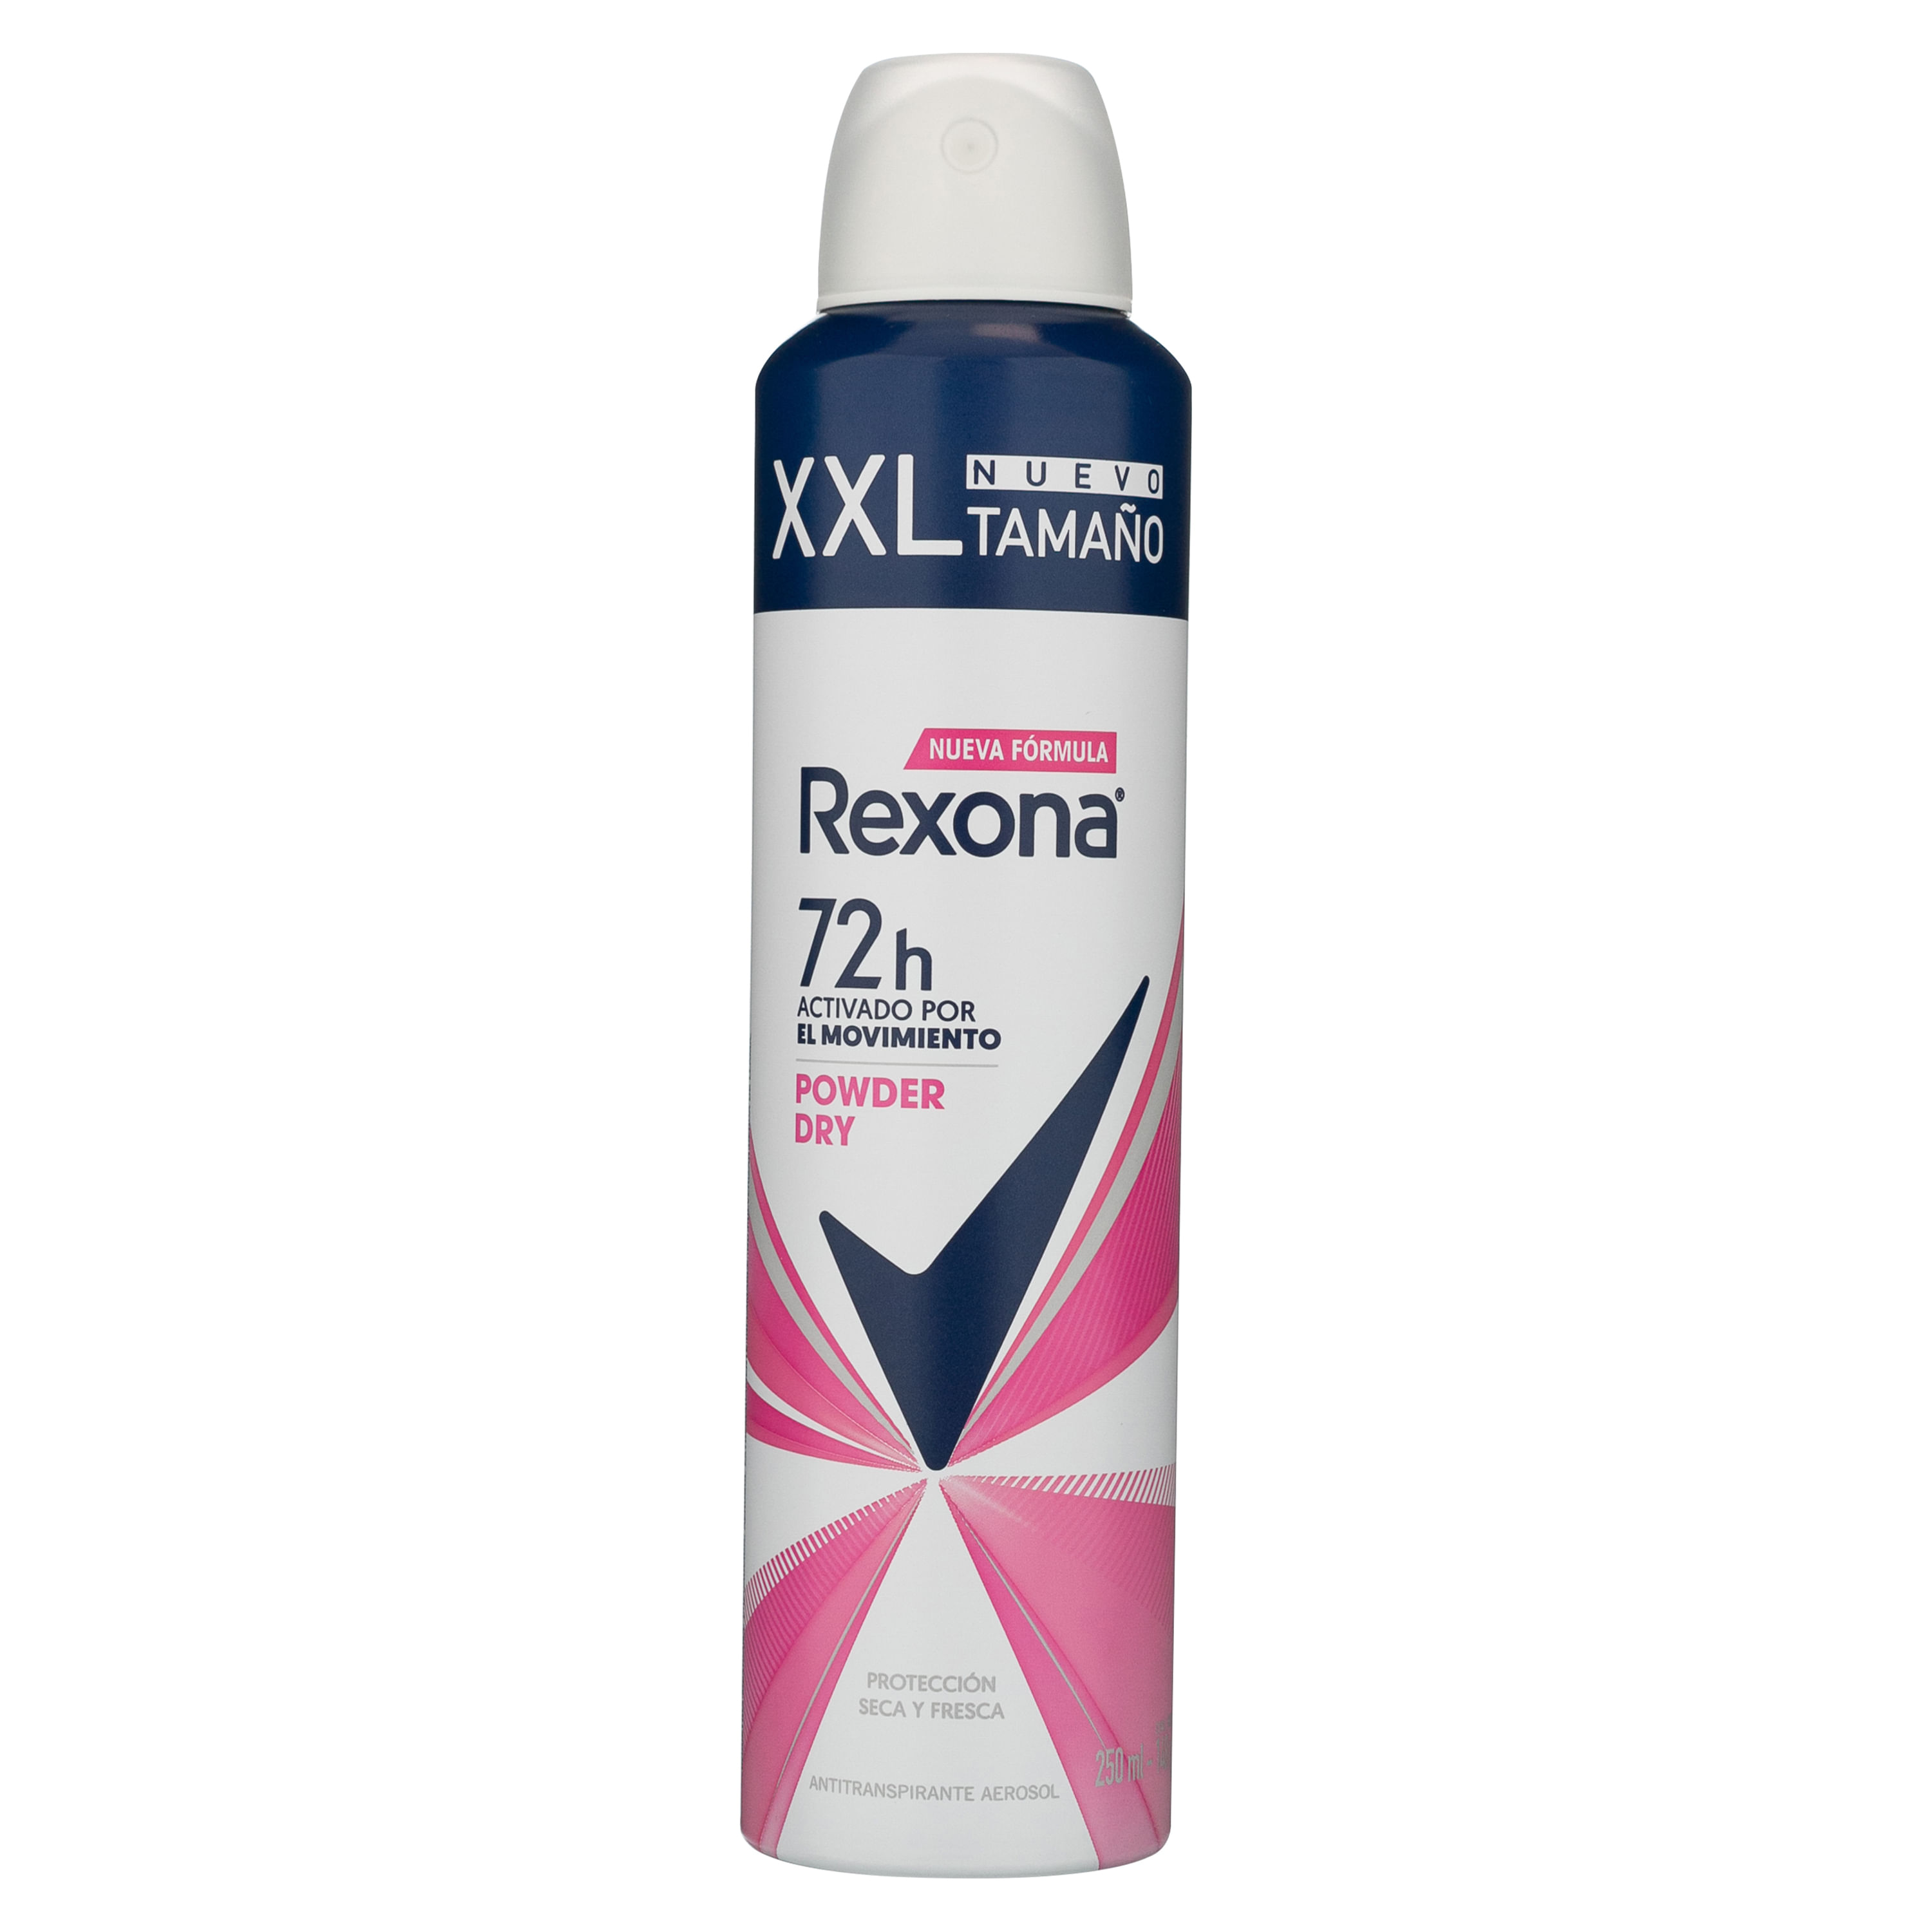 Rexona Desodorante Aerosol Antitranspirante Powder Dry Feminino 150ml -  Incolor